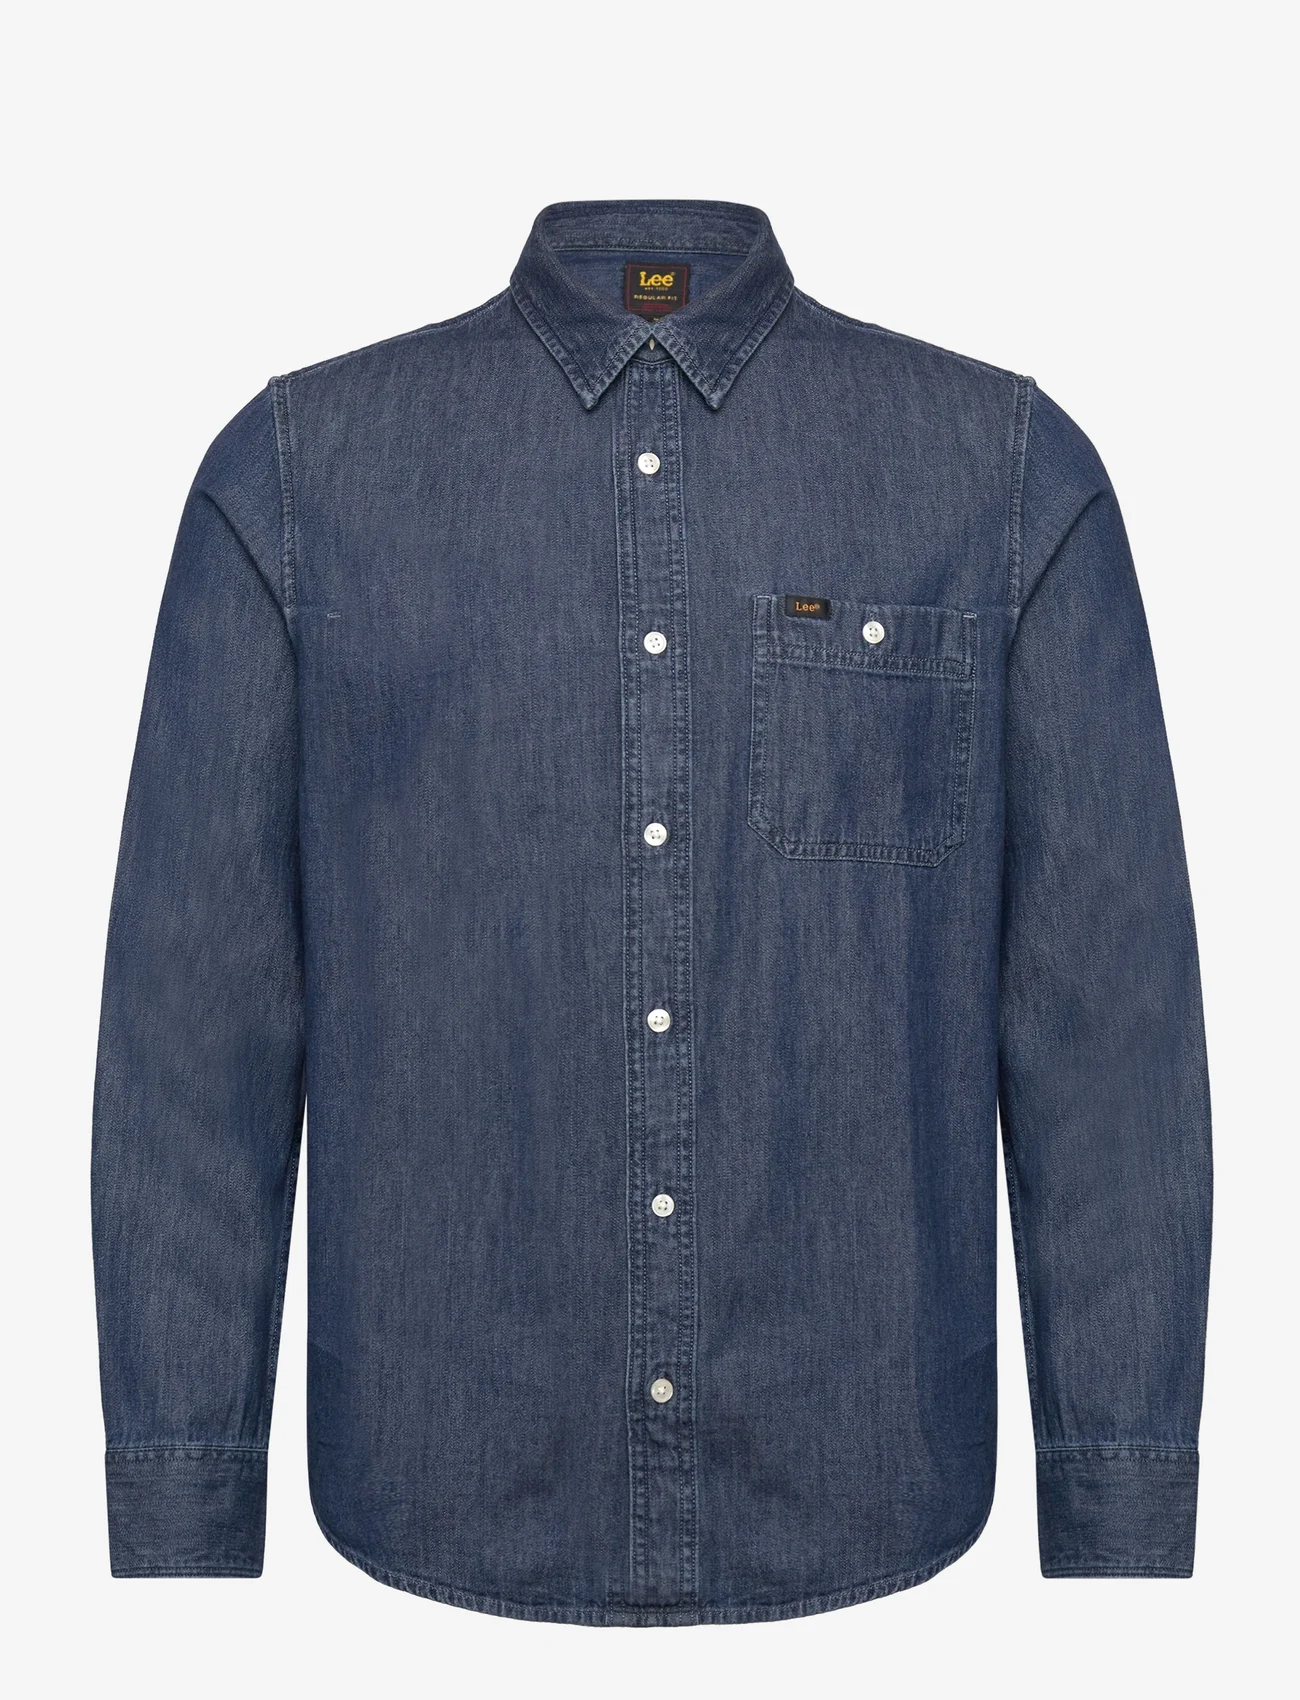 Lee Jeans - LEESURE SHIRT - checkered shirts - heirloom wash - 0